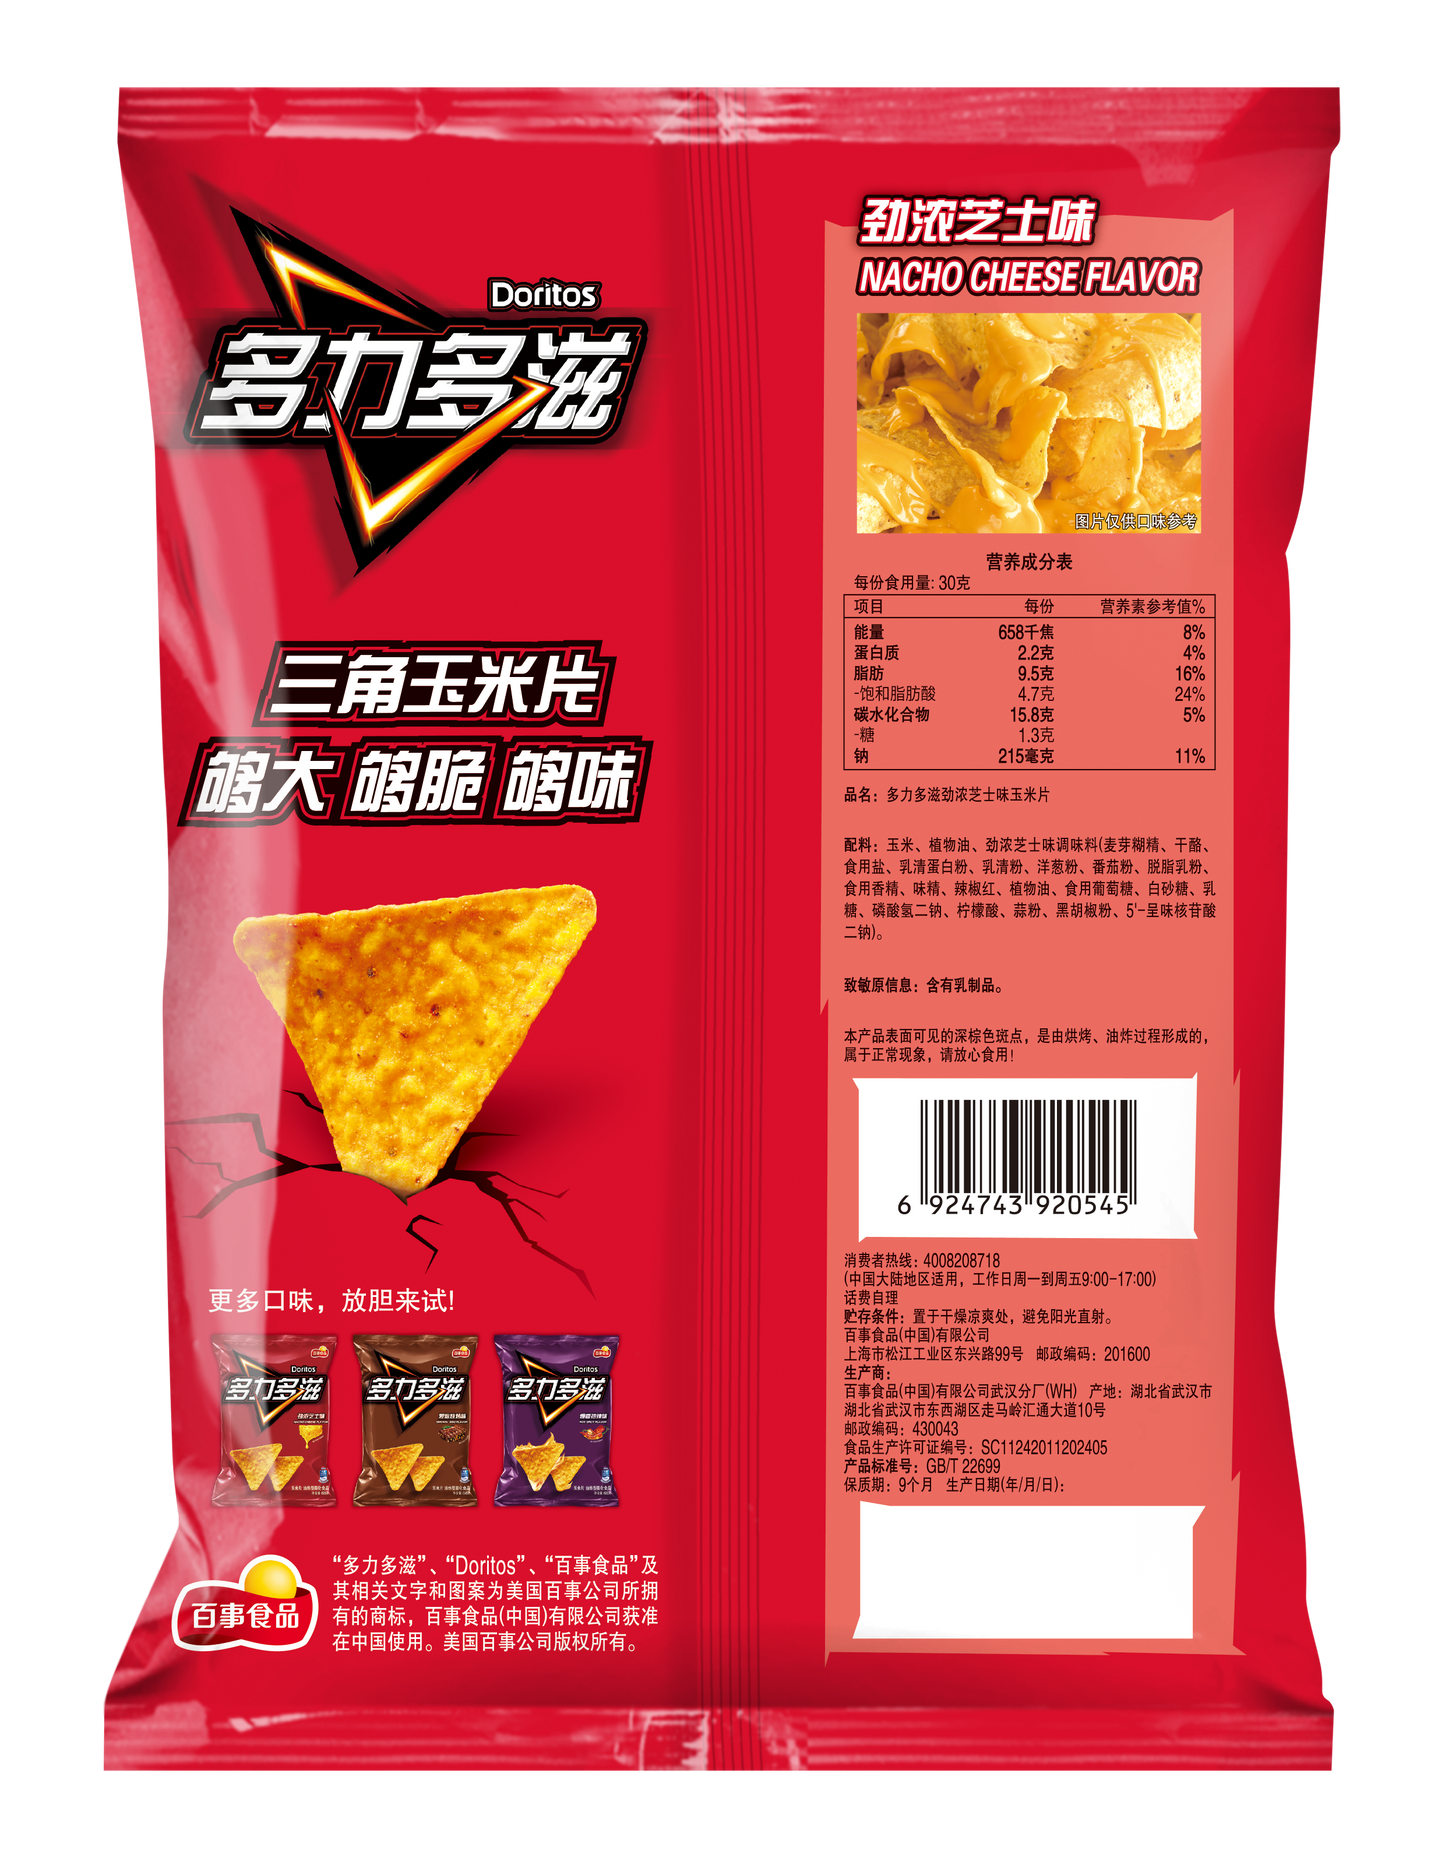 Doritos Nacho Cheese Tortilla Chips (China) 68g*22/Case